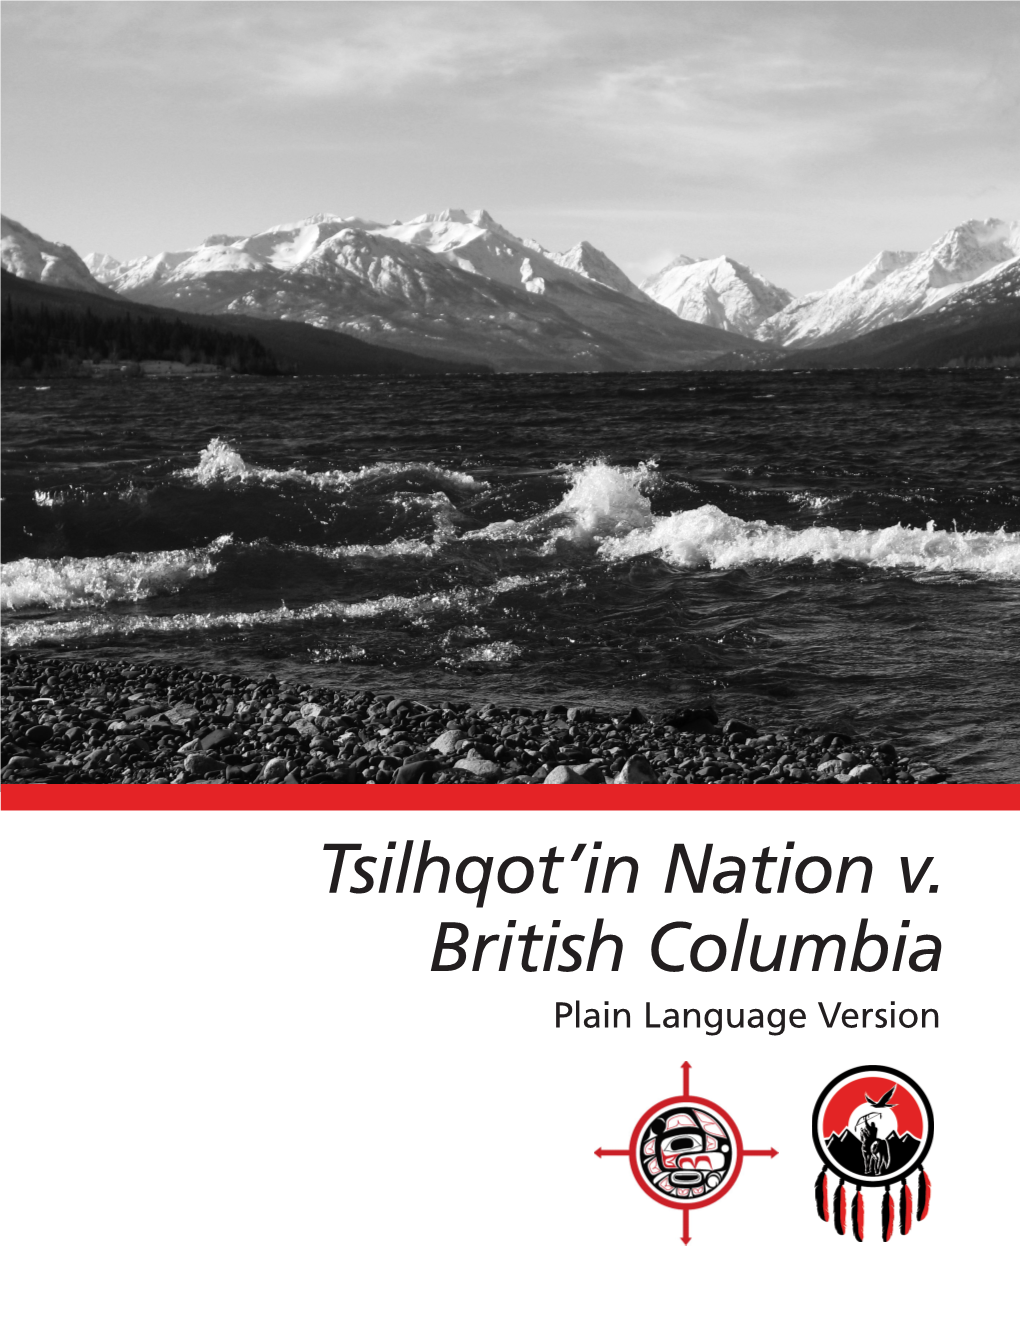 Tsilhqot'in Nation V. British Columbia